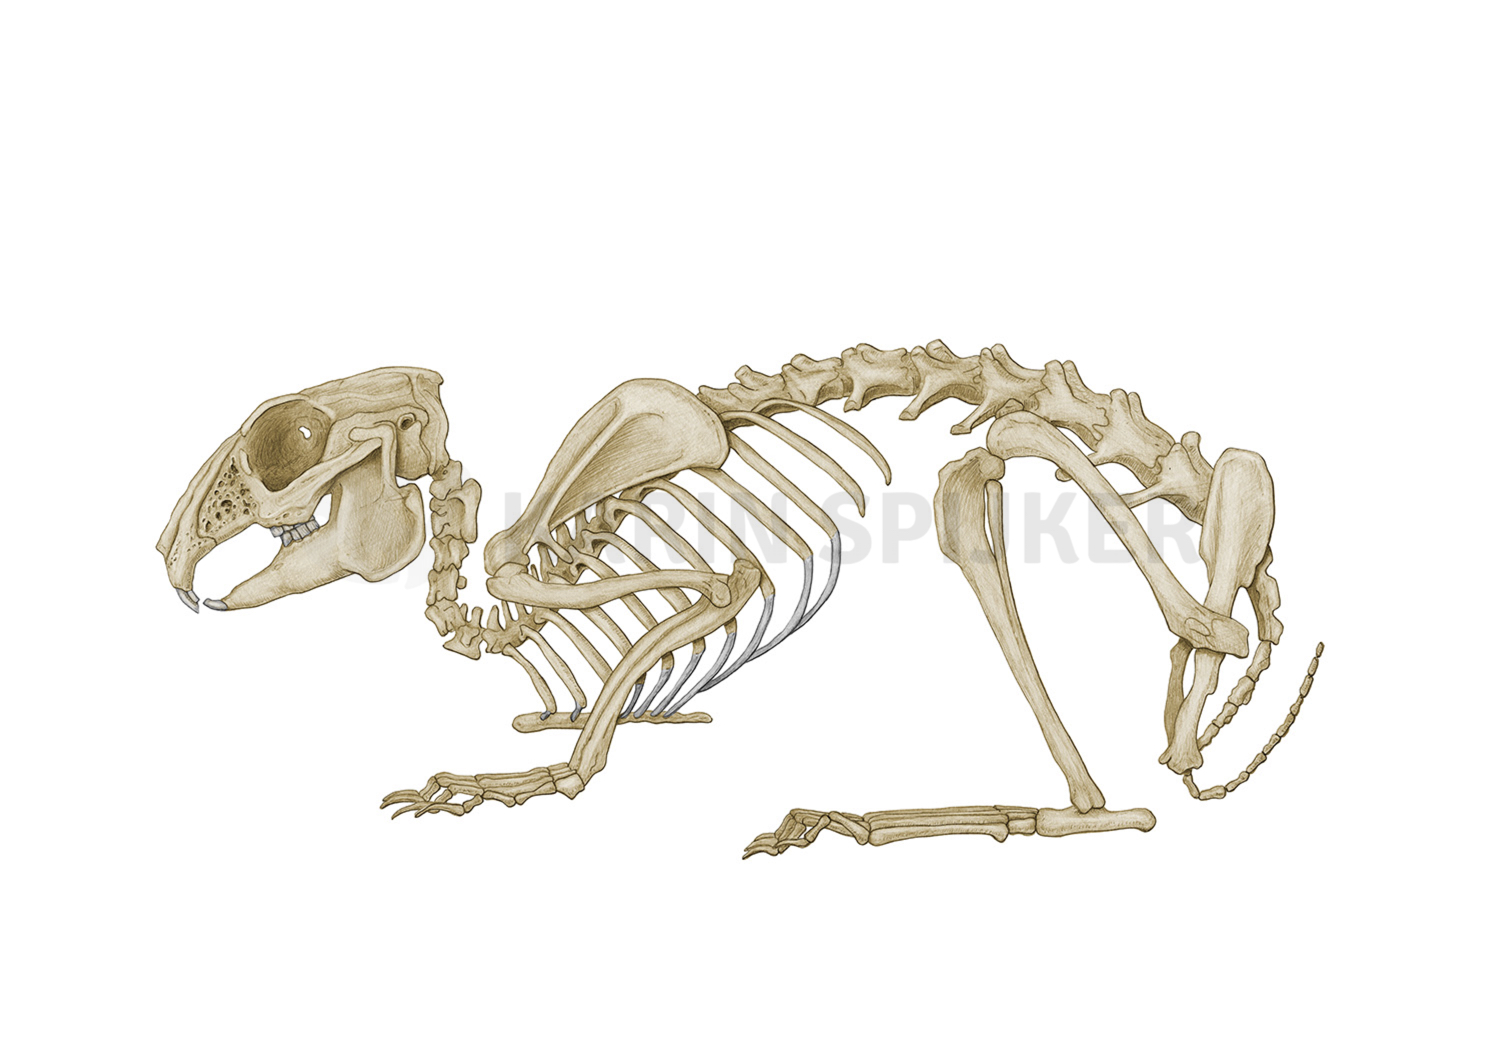 Rabbit skeleton